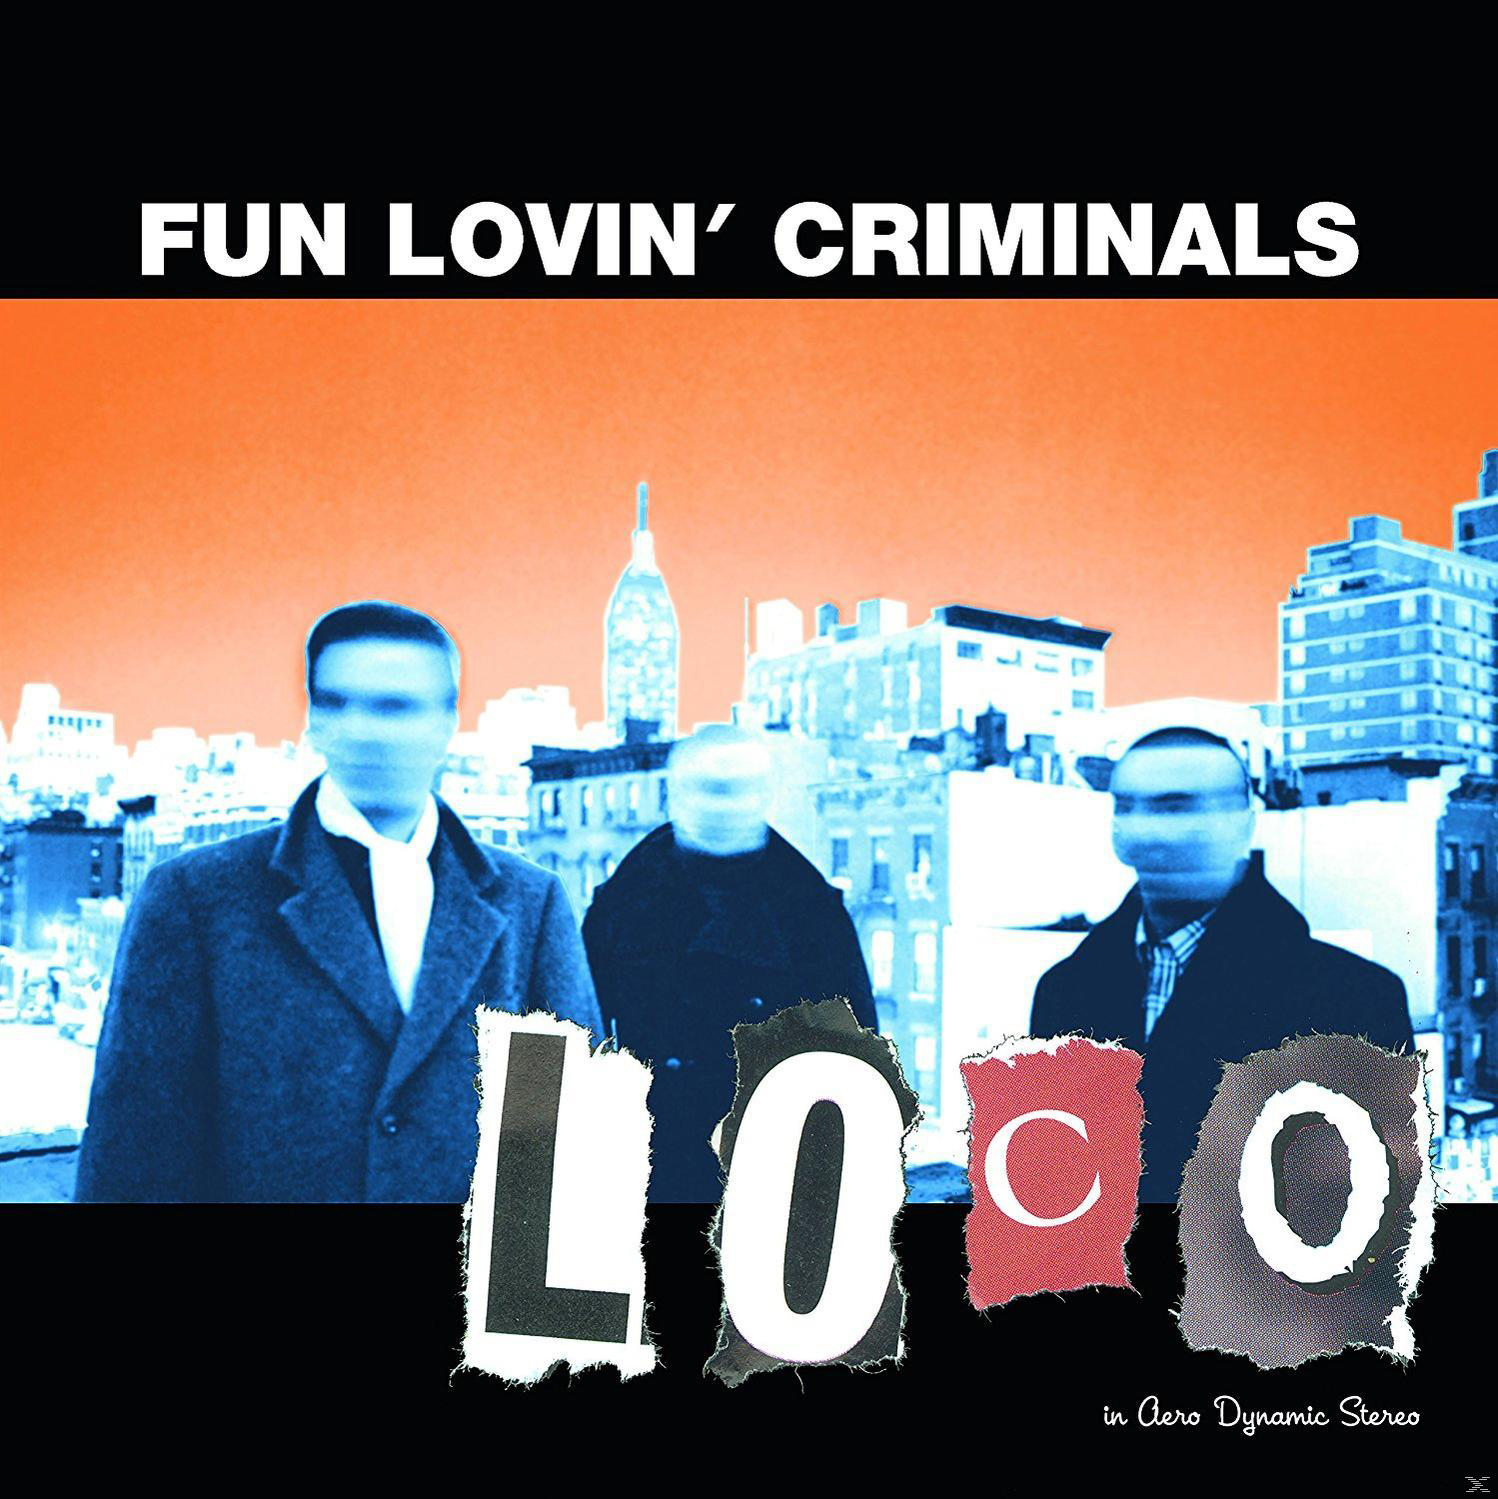 - (CD) Criminals Fun Loco - Lovin\'